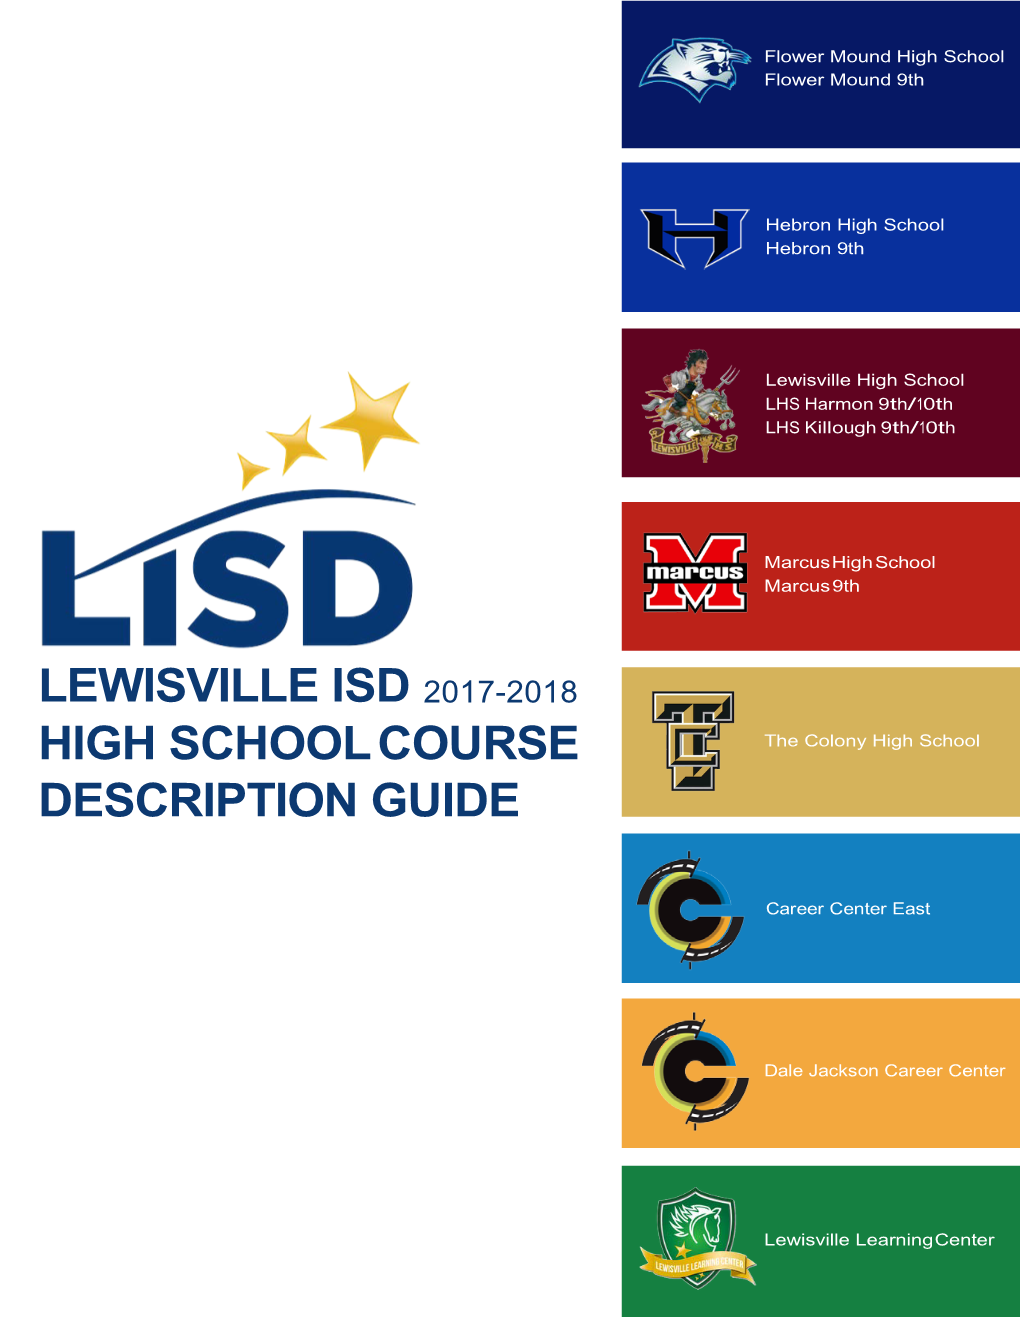 Lewisville Isd 2017-2018 High School Course Description